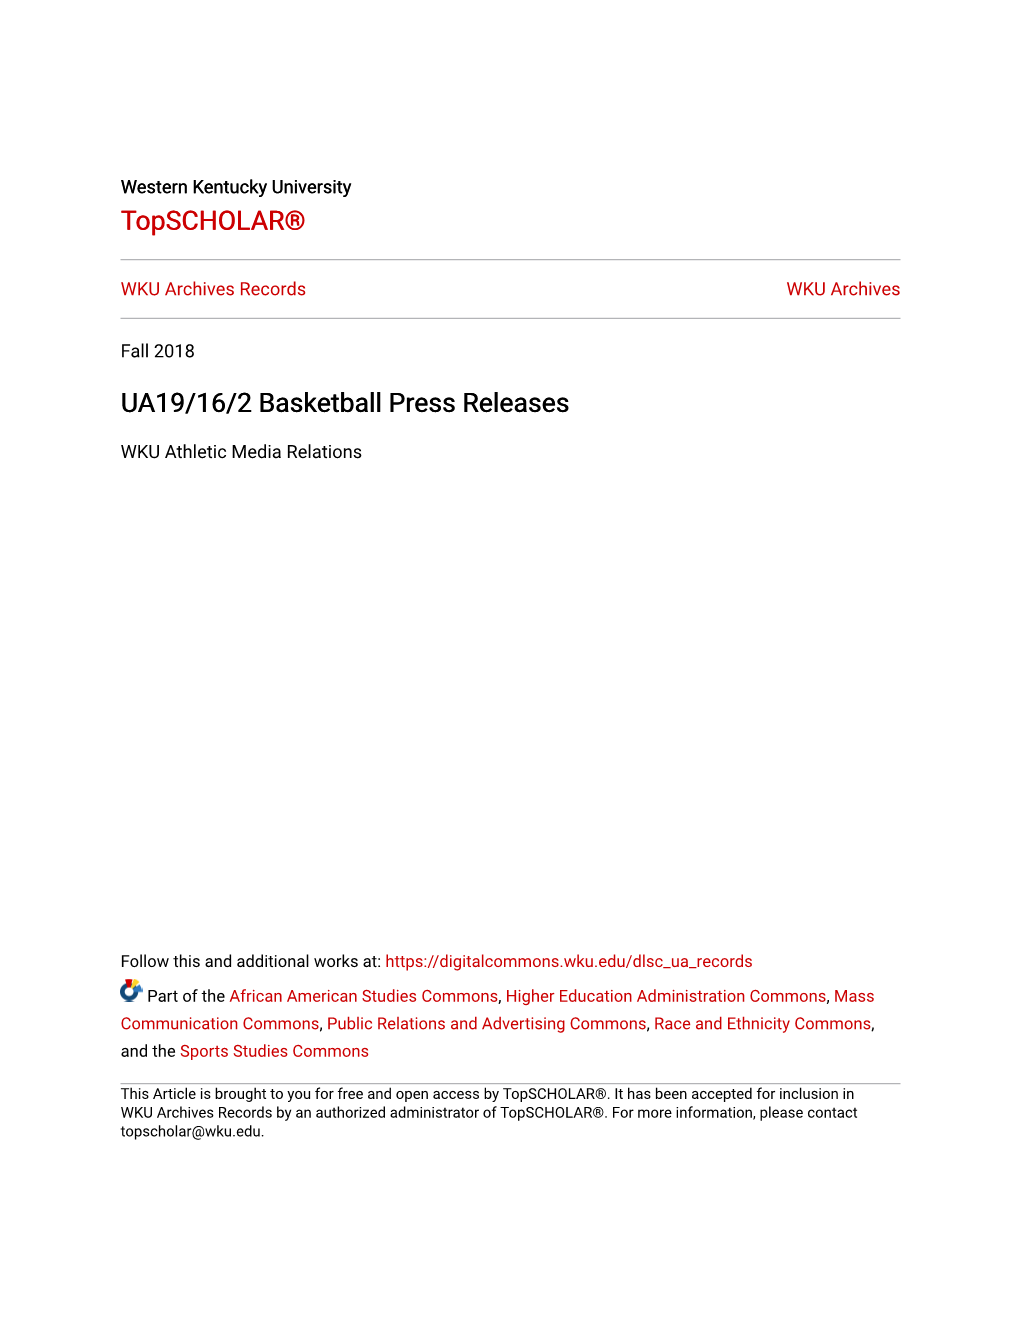 UA19/16/2 Basketball Press Releases